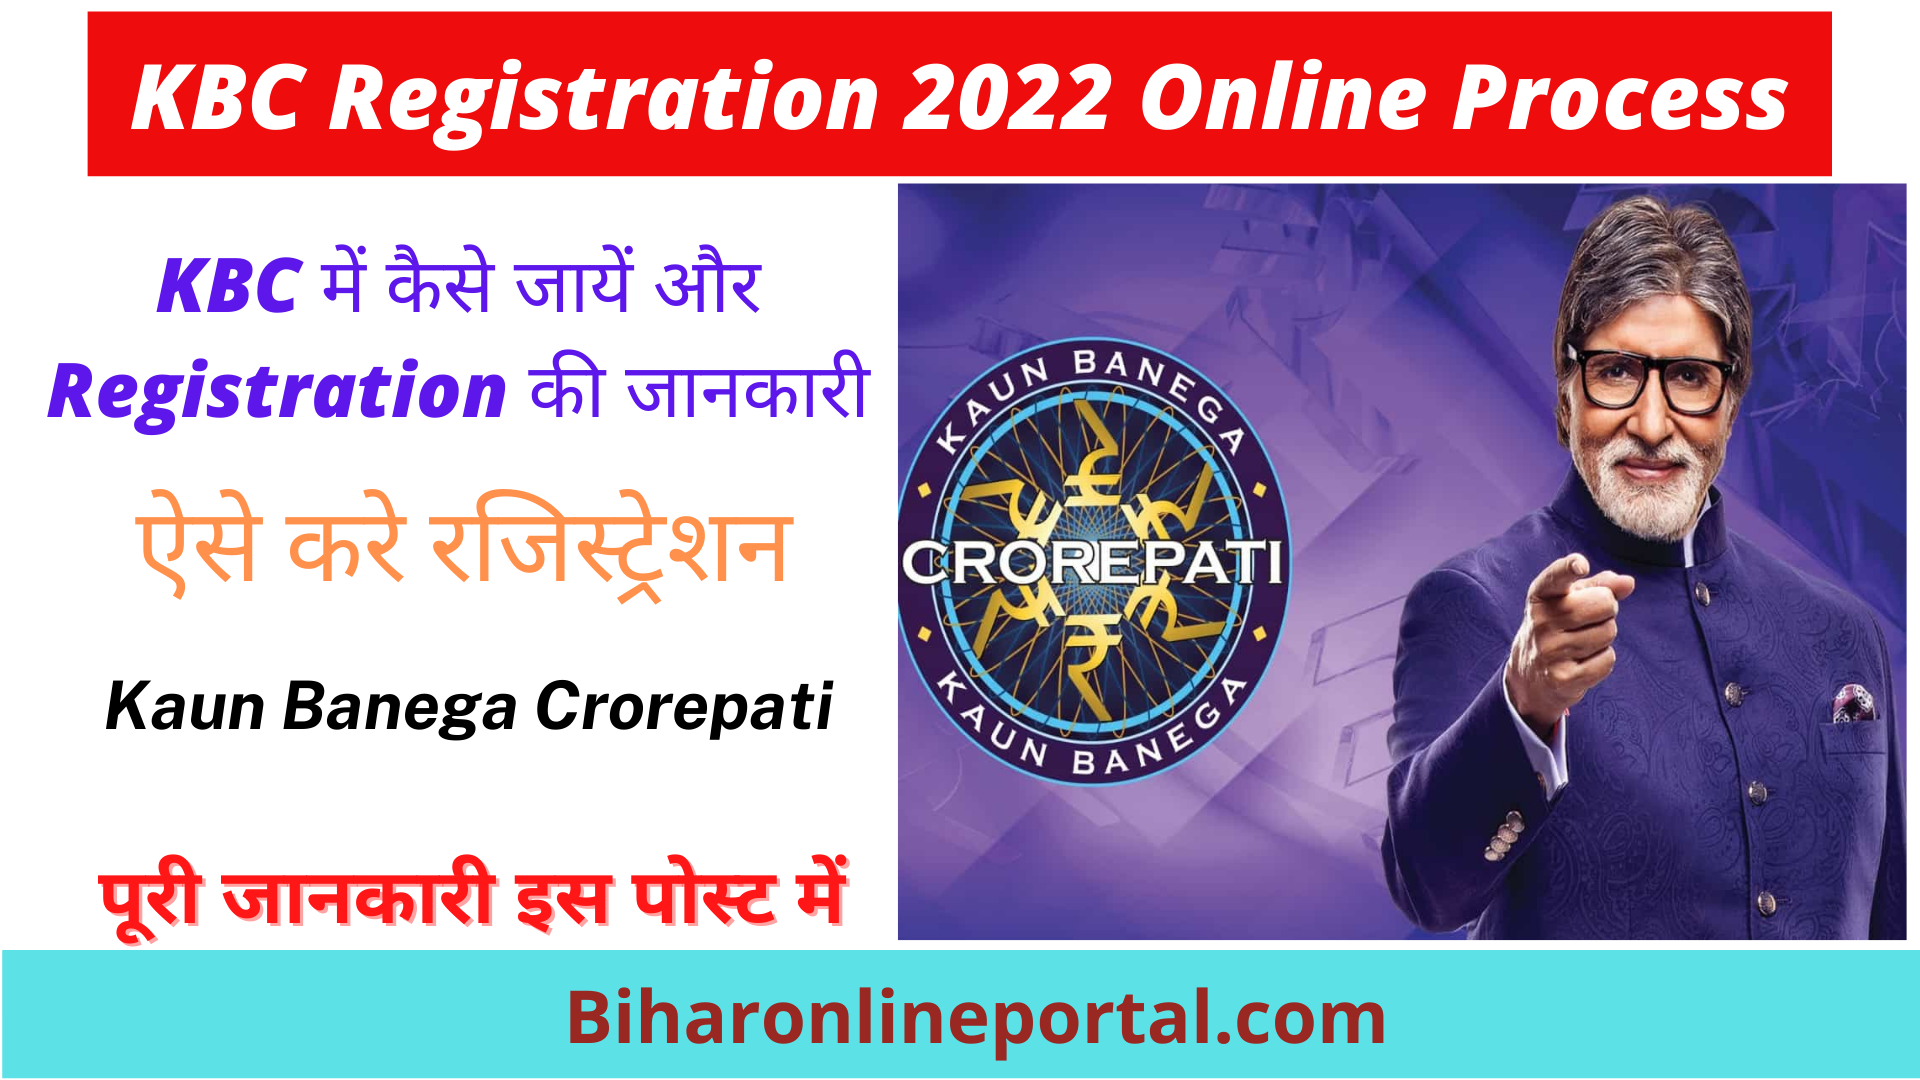 KBC Registration 2022 Online Process